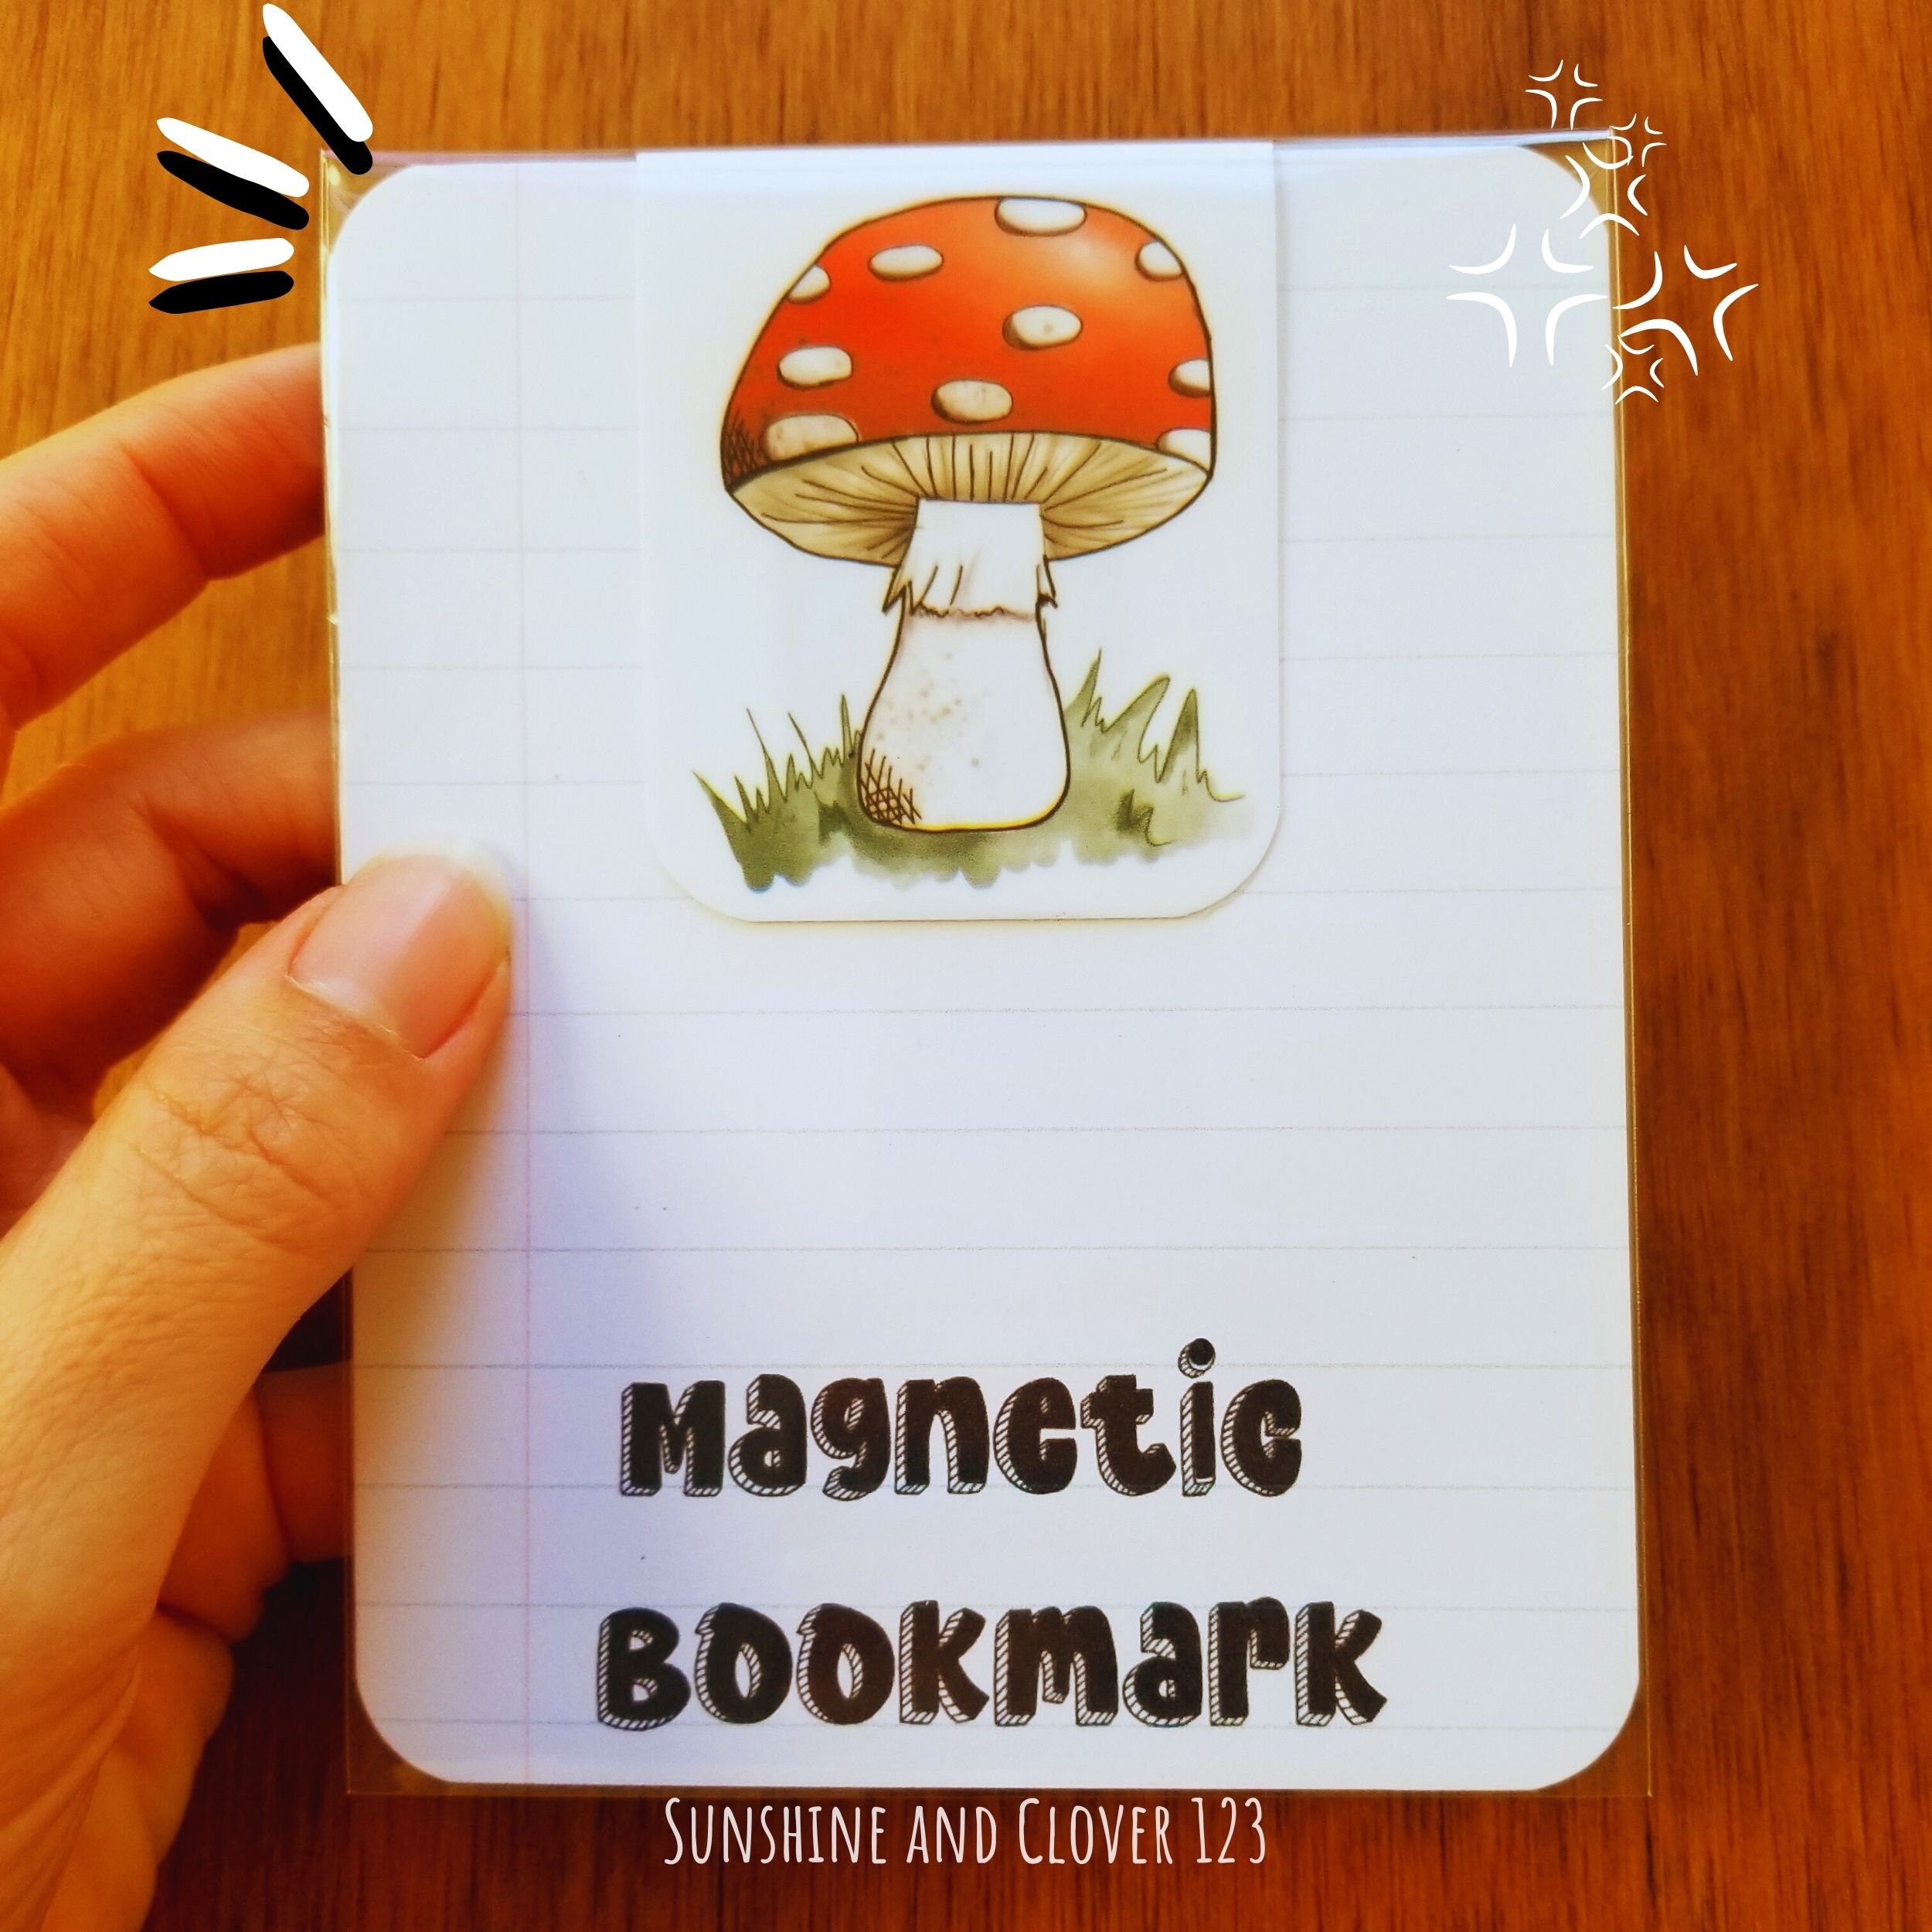 Magnetic Bookmark Green Mushroom - Sunshine and Clover 123